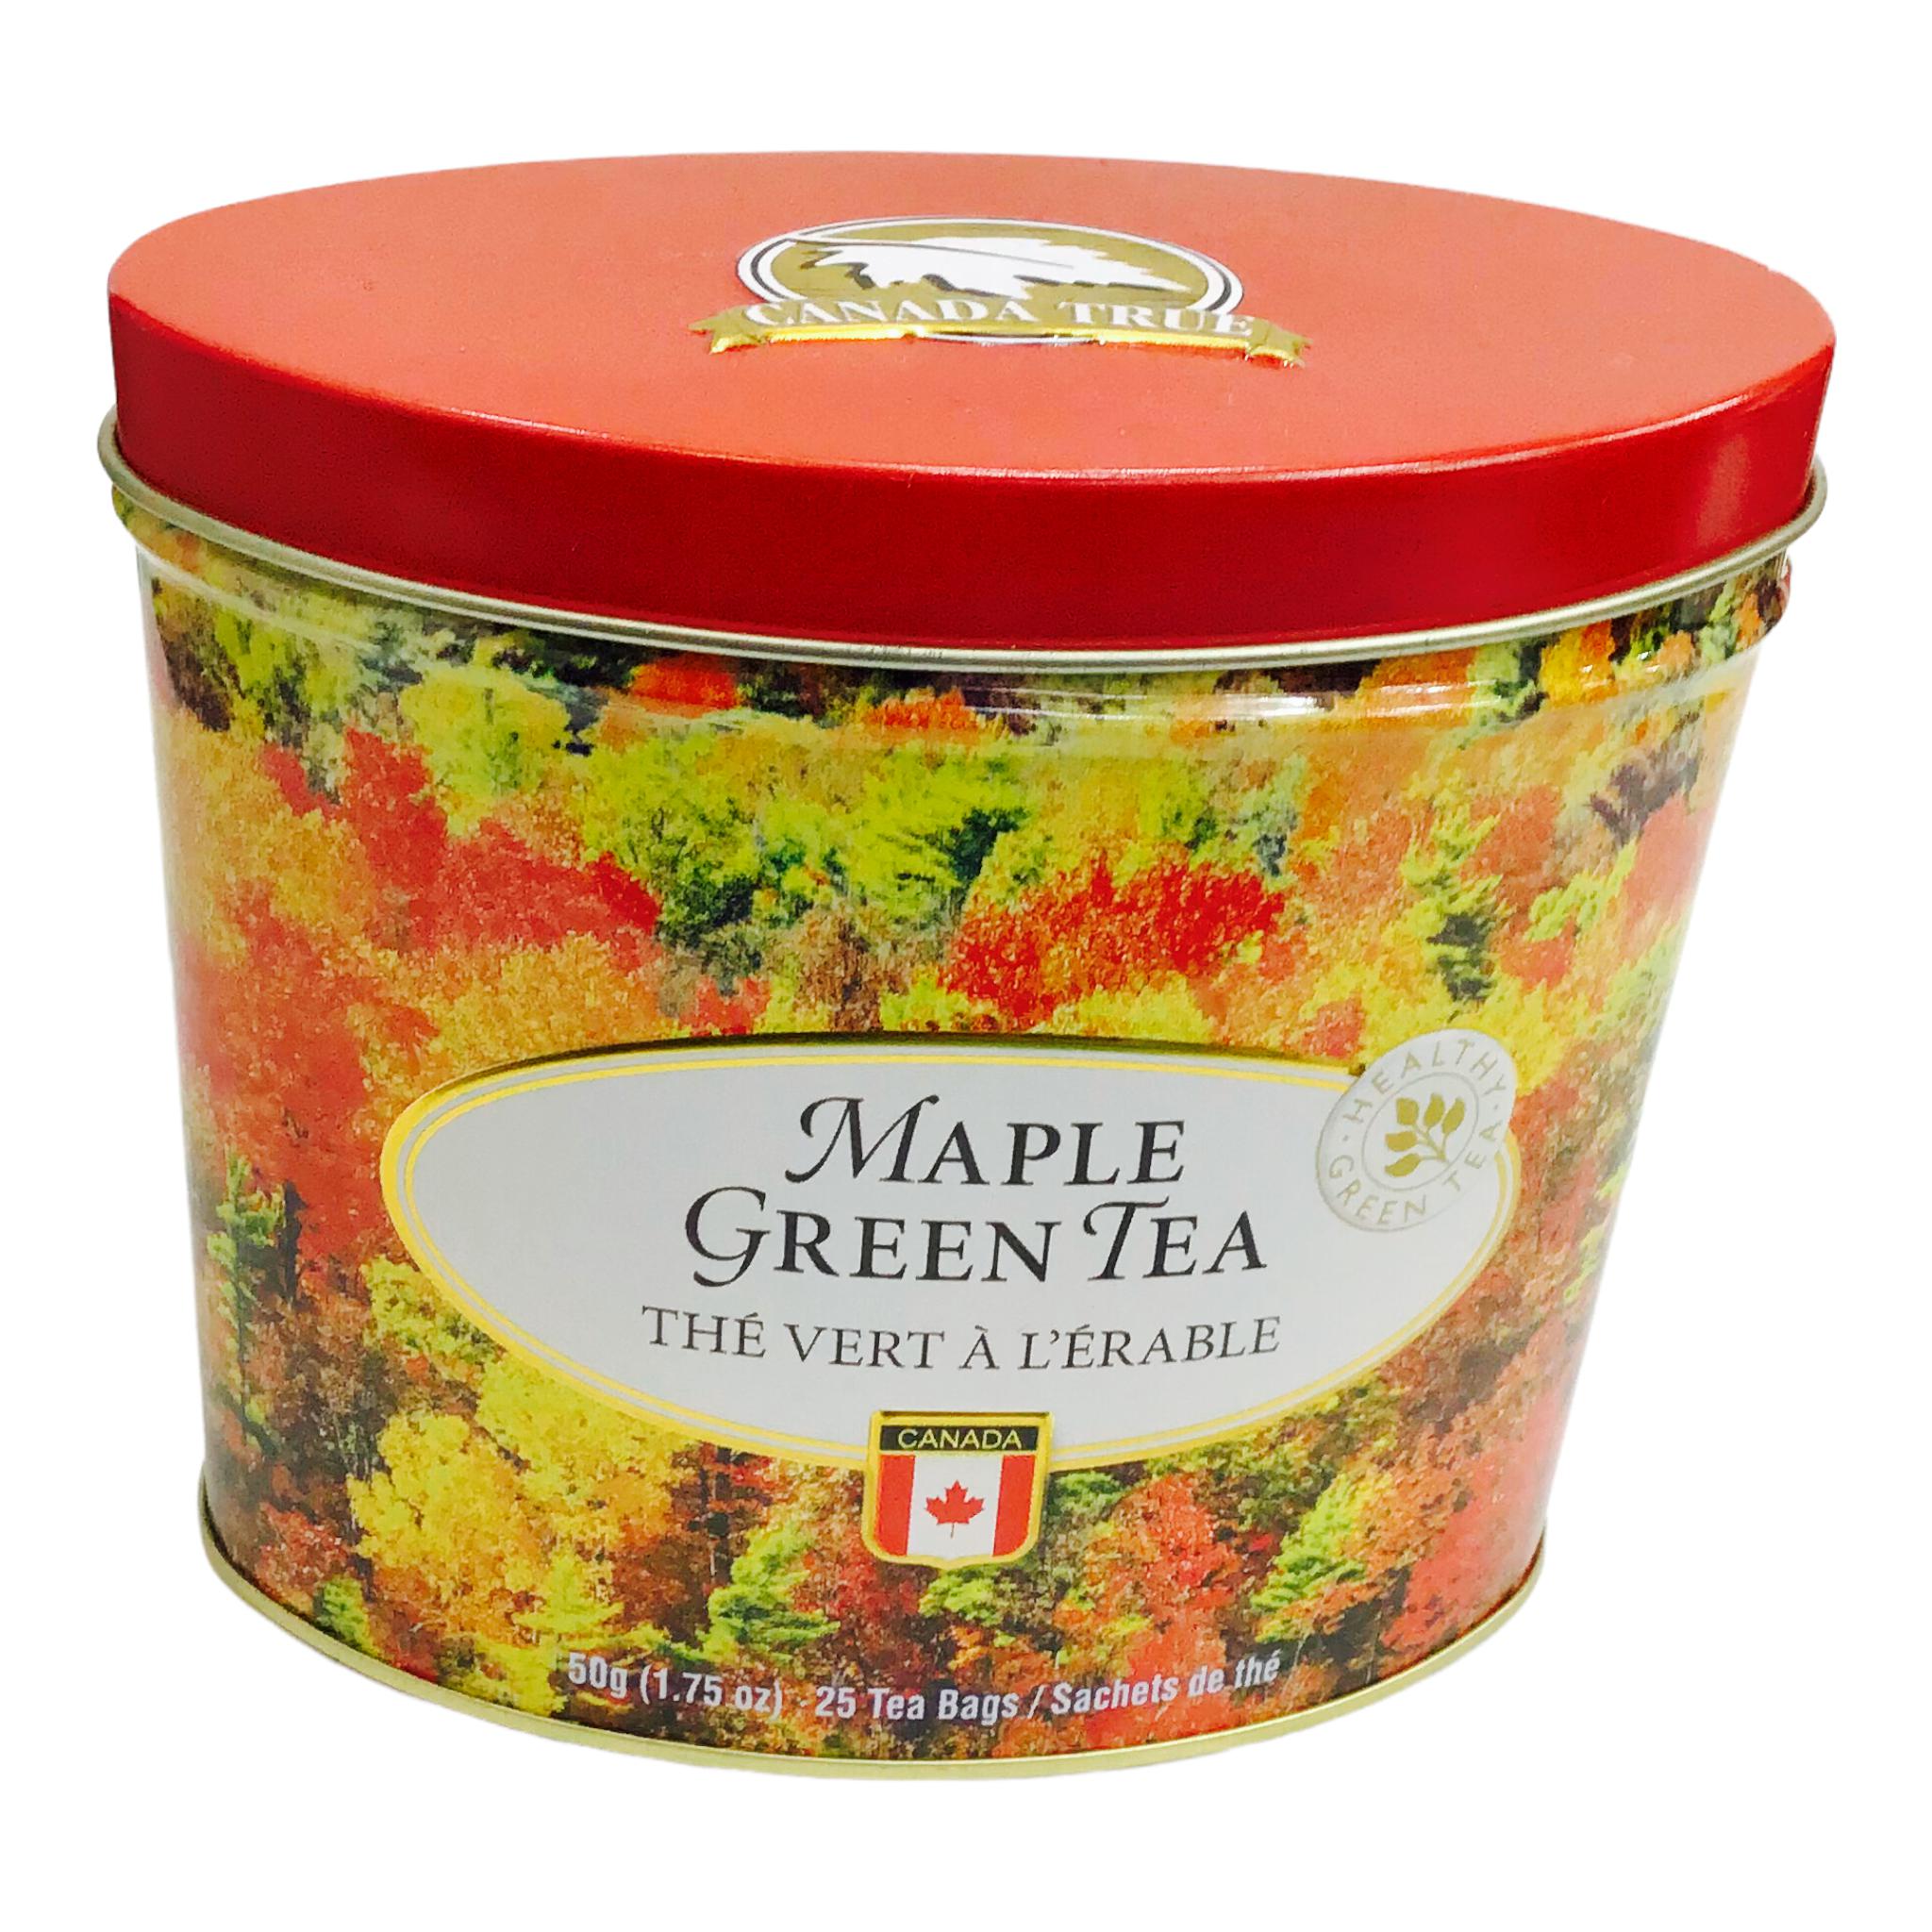 CANADA TRUE premium Ceylon Black or Green Tea -25 Tea Bags 50g Can Package (Maple Earl Grey Tea)